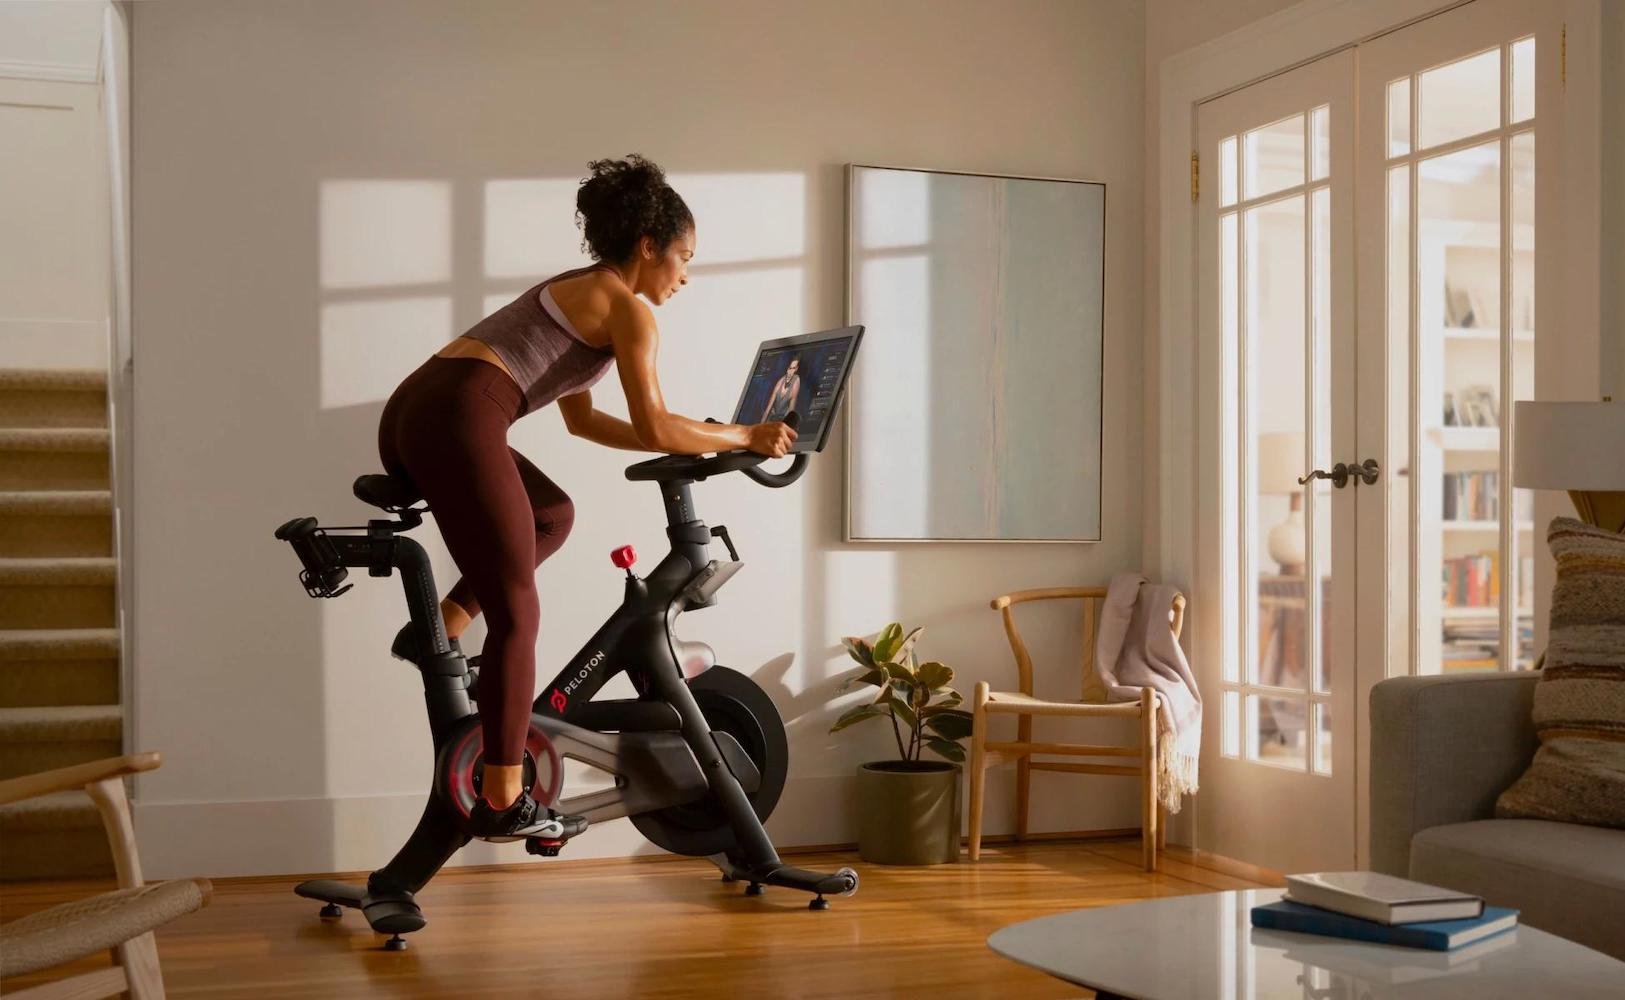 Peloton Indoor Exercise Bike gives you an intense home cardio workout